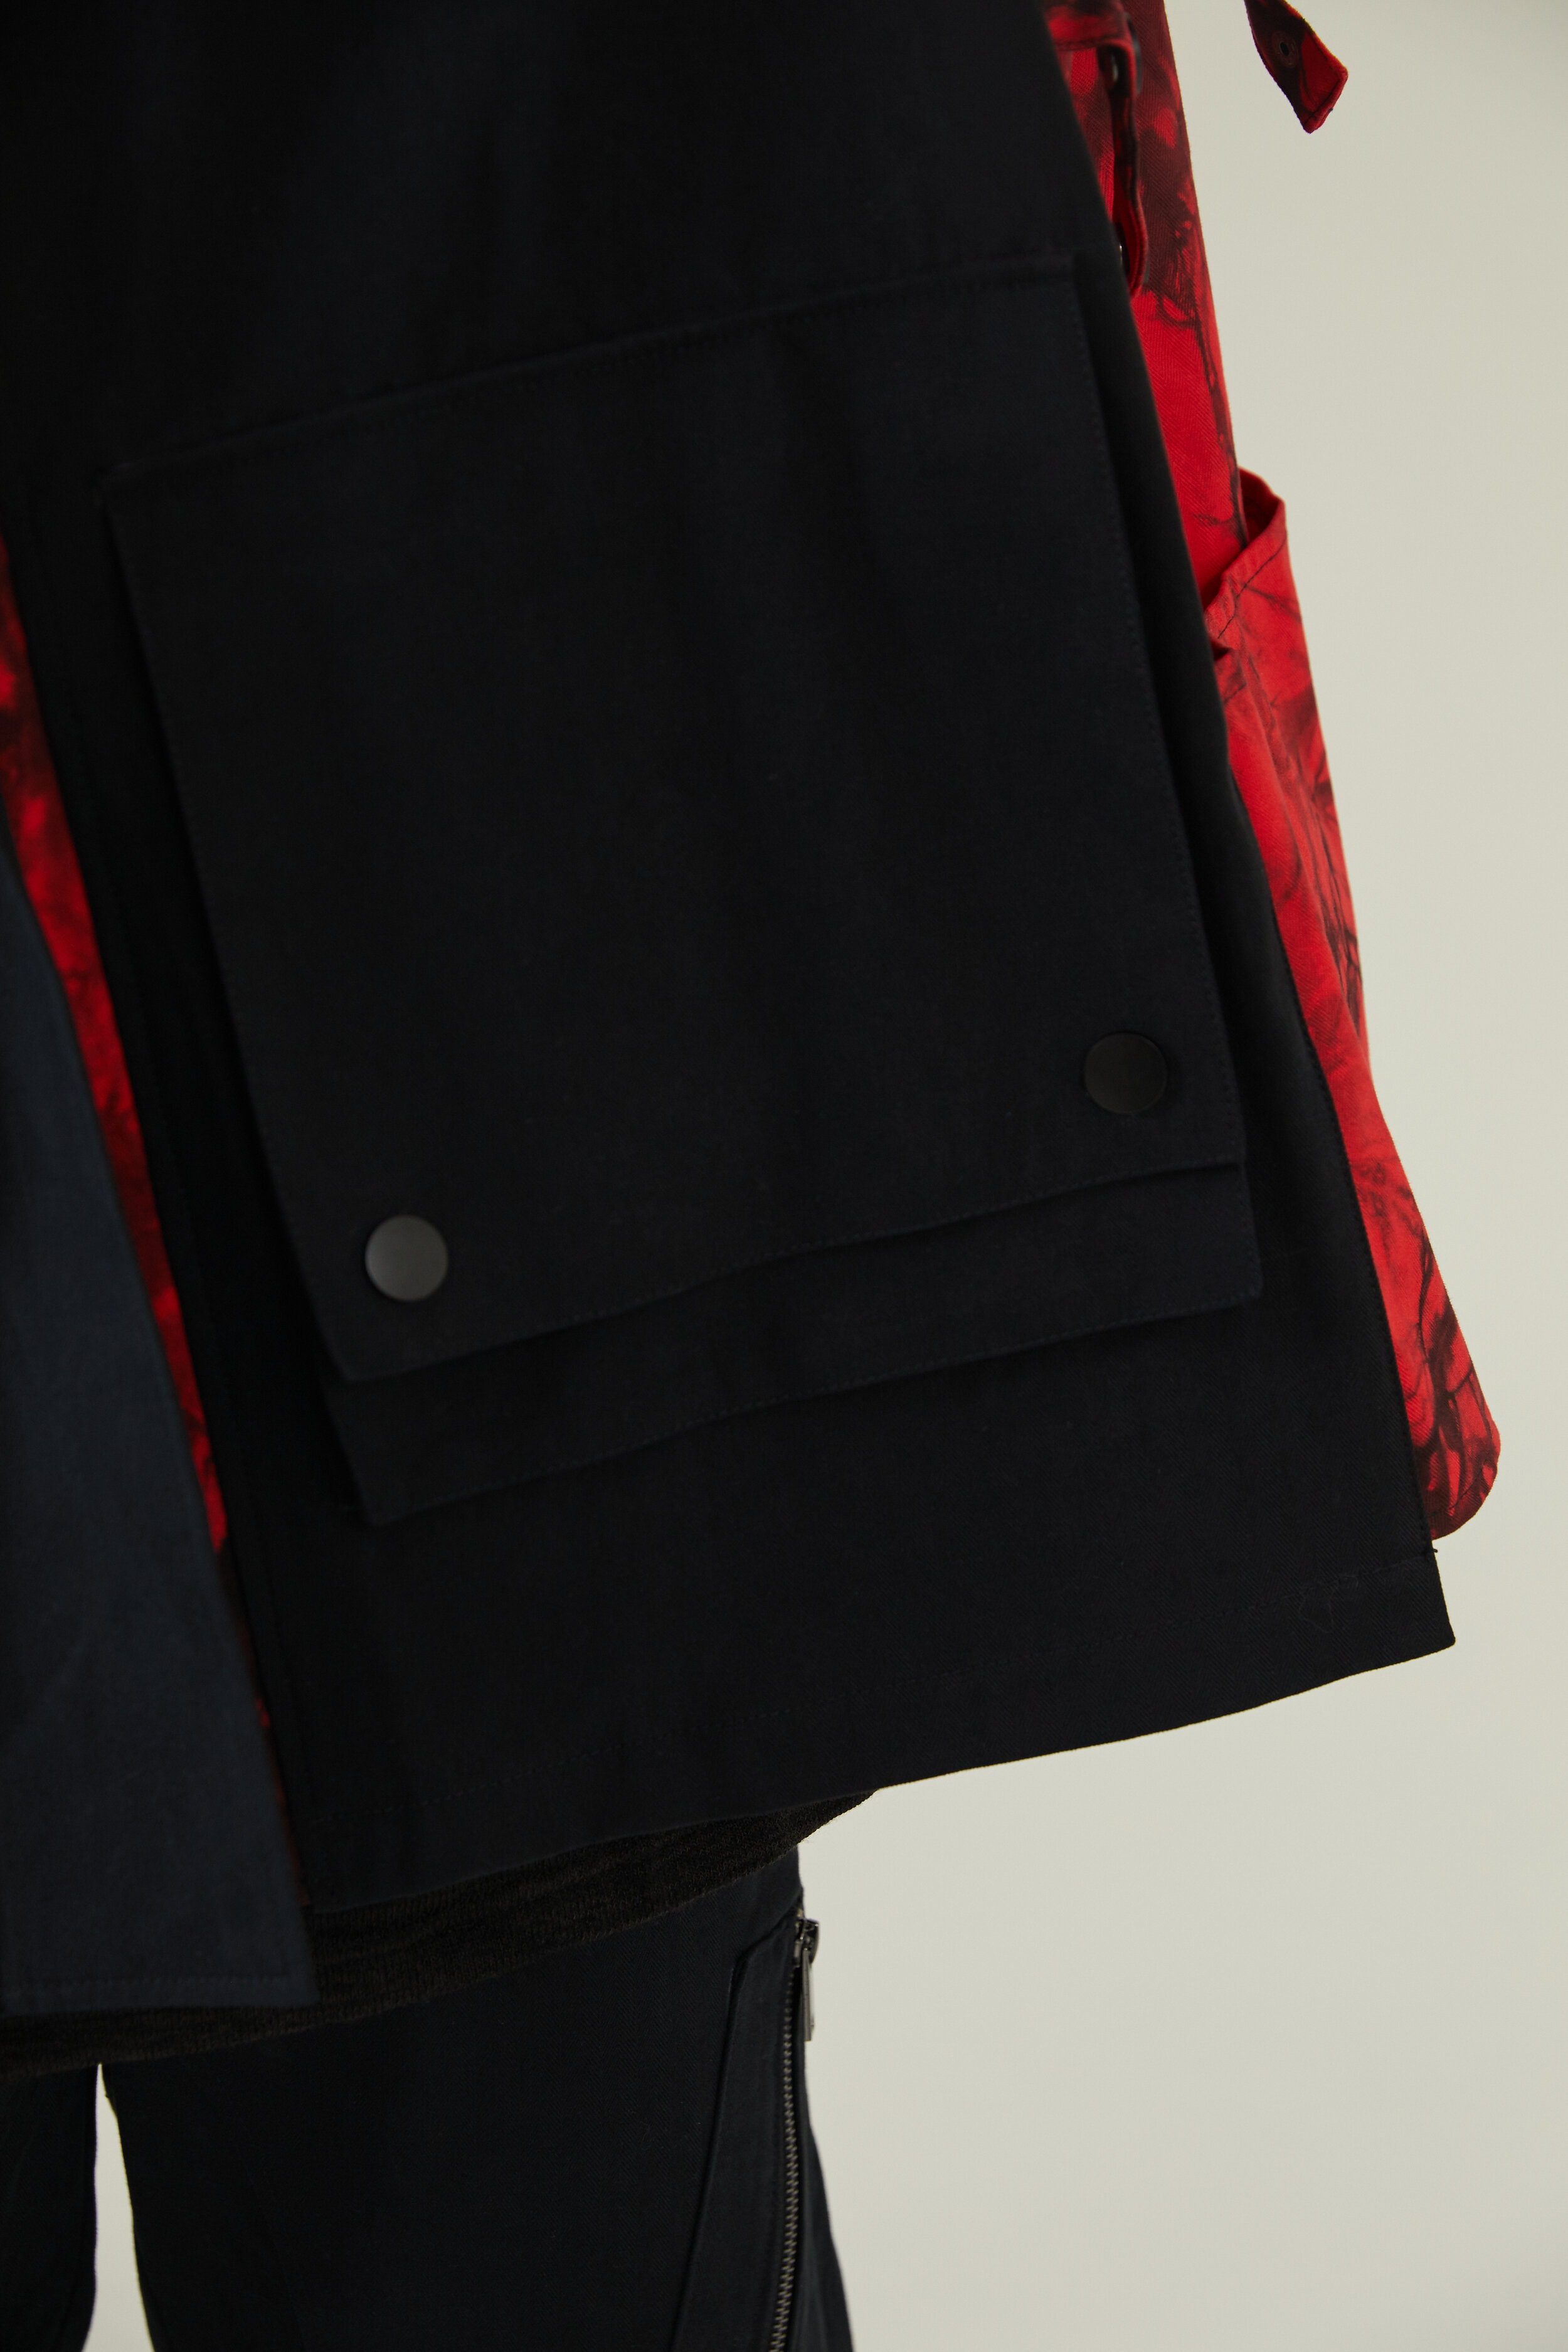 Adjustable Militant Jacket (Infrared) — Awor NY